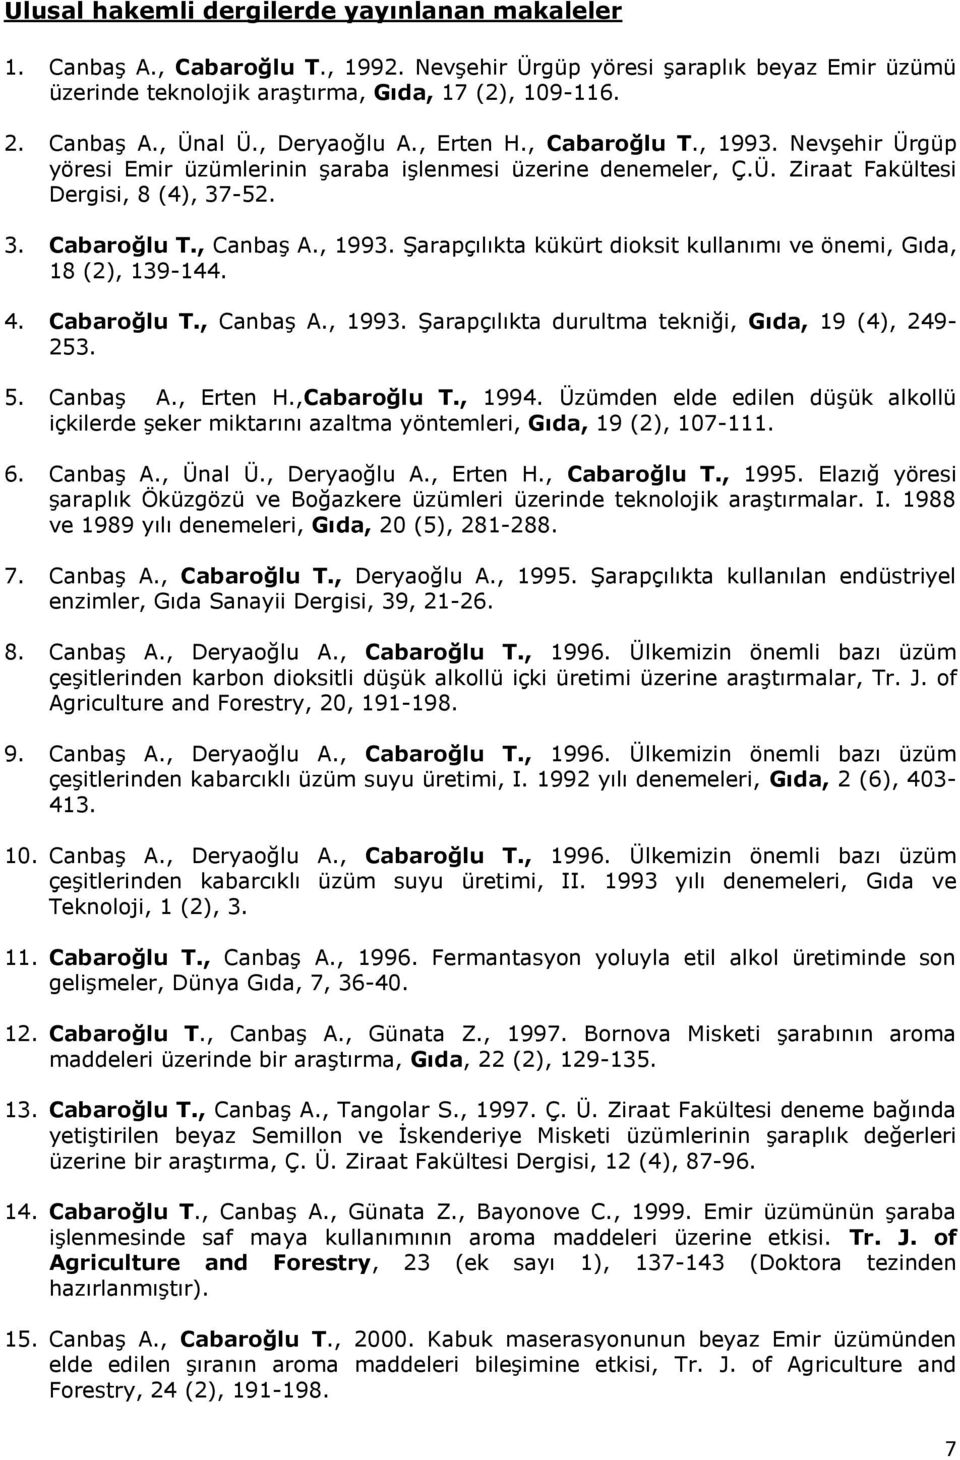 4. Cabaroğlu T., Canbaş A., 1993. Şarapçılıkta durultma tekniği, Gıda, 19 (4), 249-253. 5. Canbaş A., Erten H.,Cabaroğlu T., 1994.